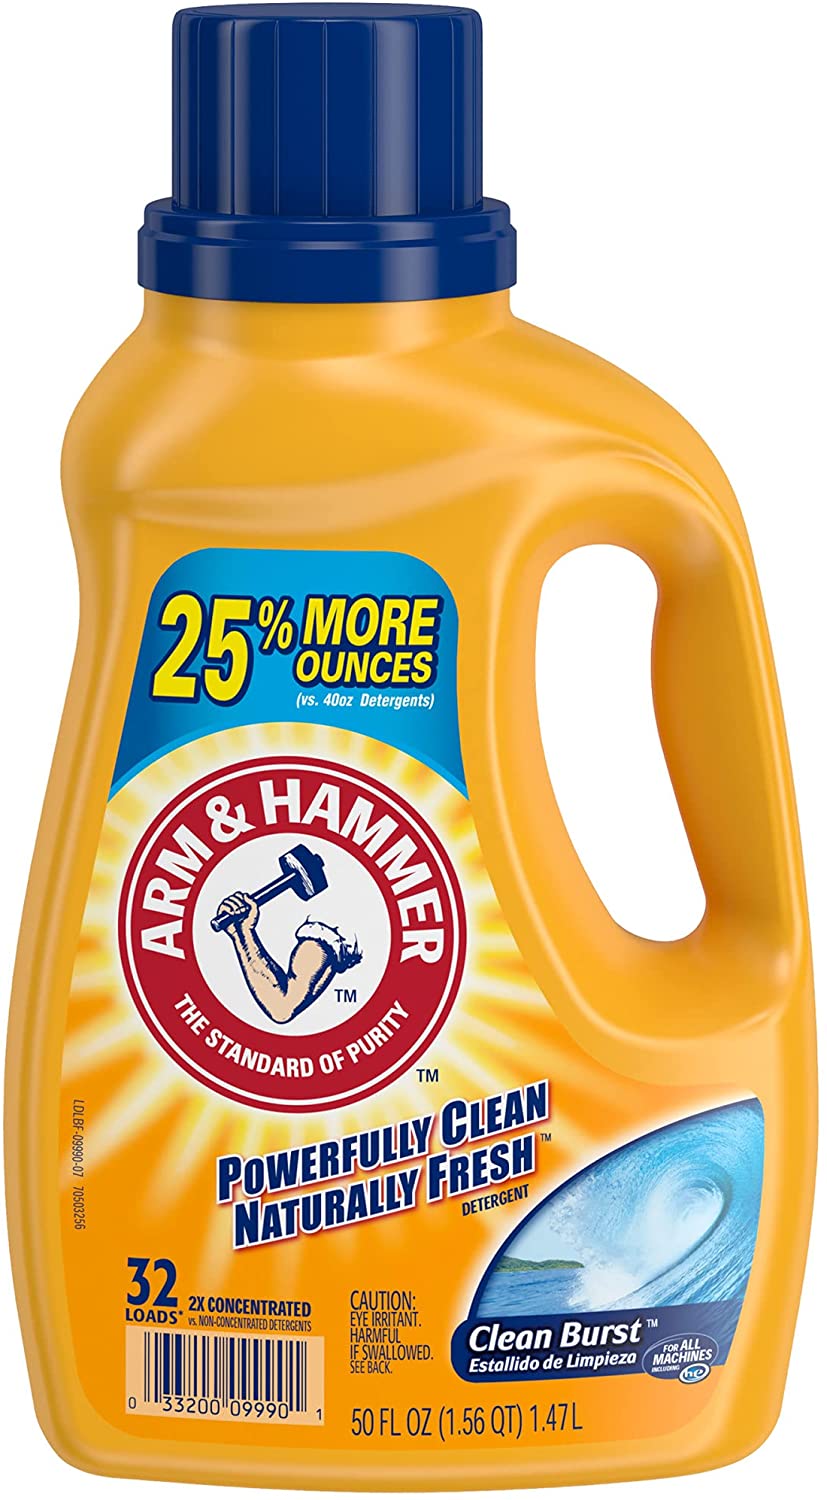 50-Oz Arm & Hammer Clean Burst Liquid Laundry Detergent (32 Loads) $2.87 at Walmart w/ Free Store Pickup